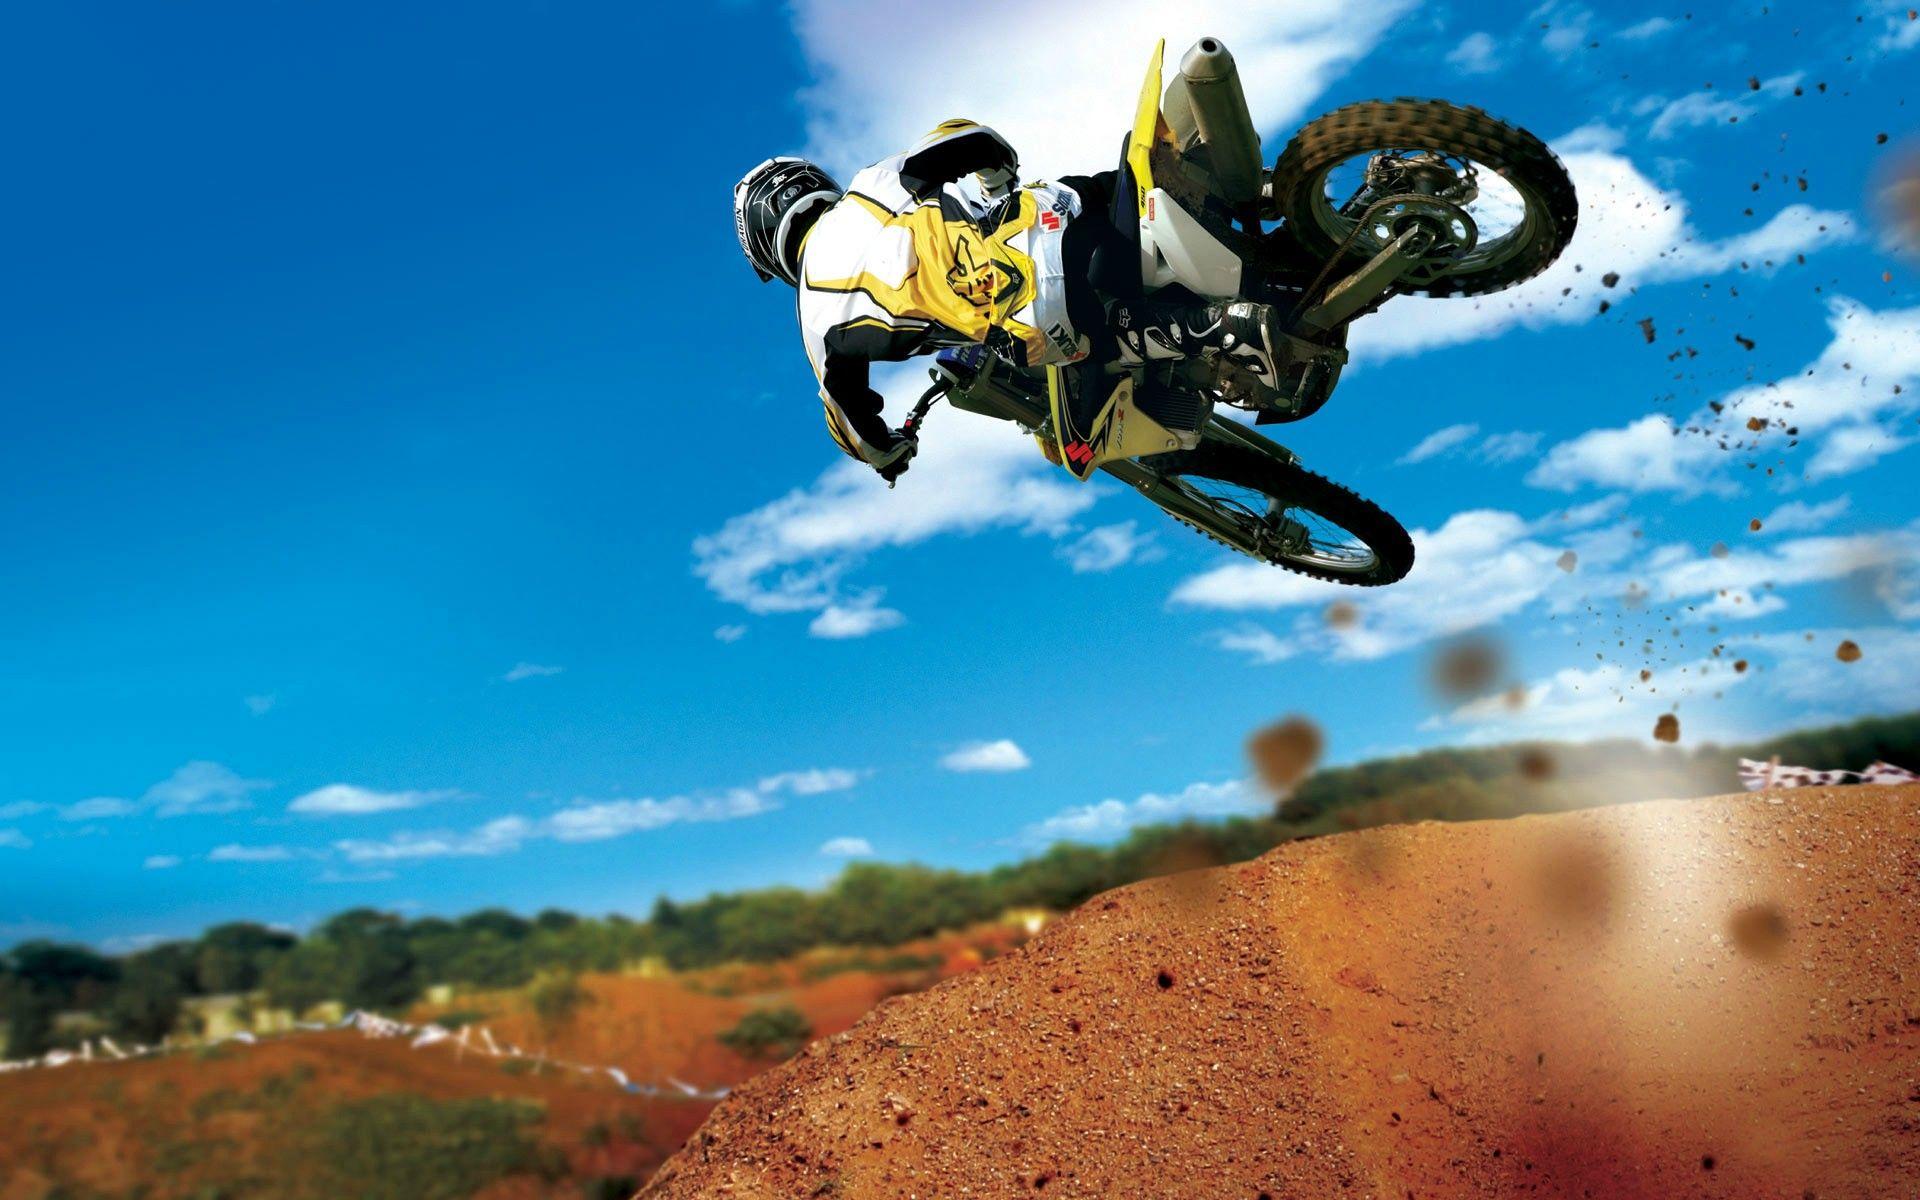 1000 Free Motocross  Motorcycle Images  Pixabay